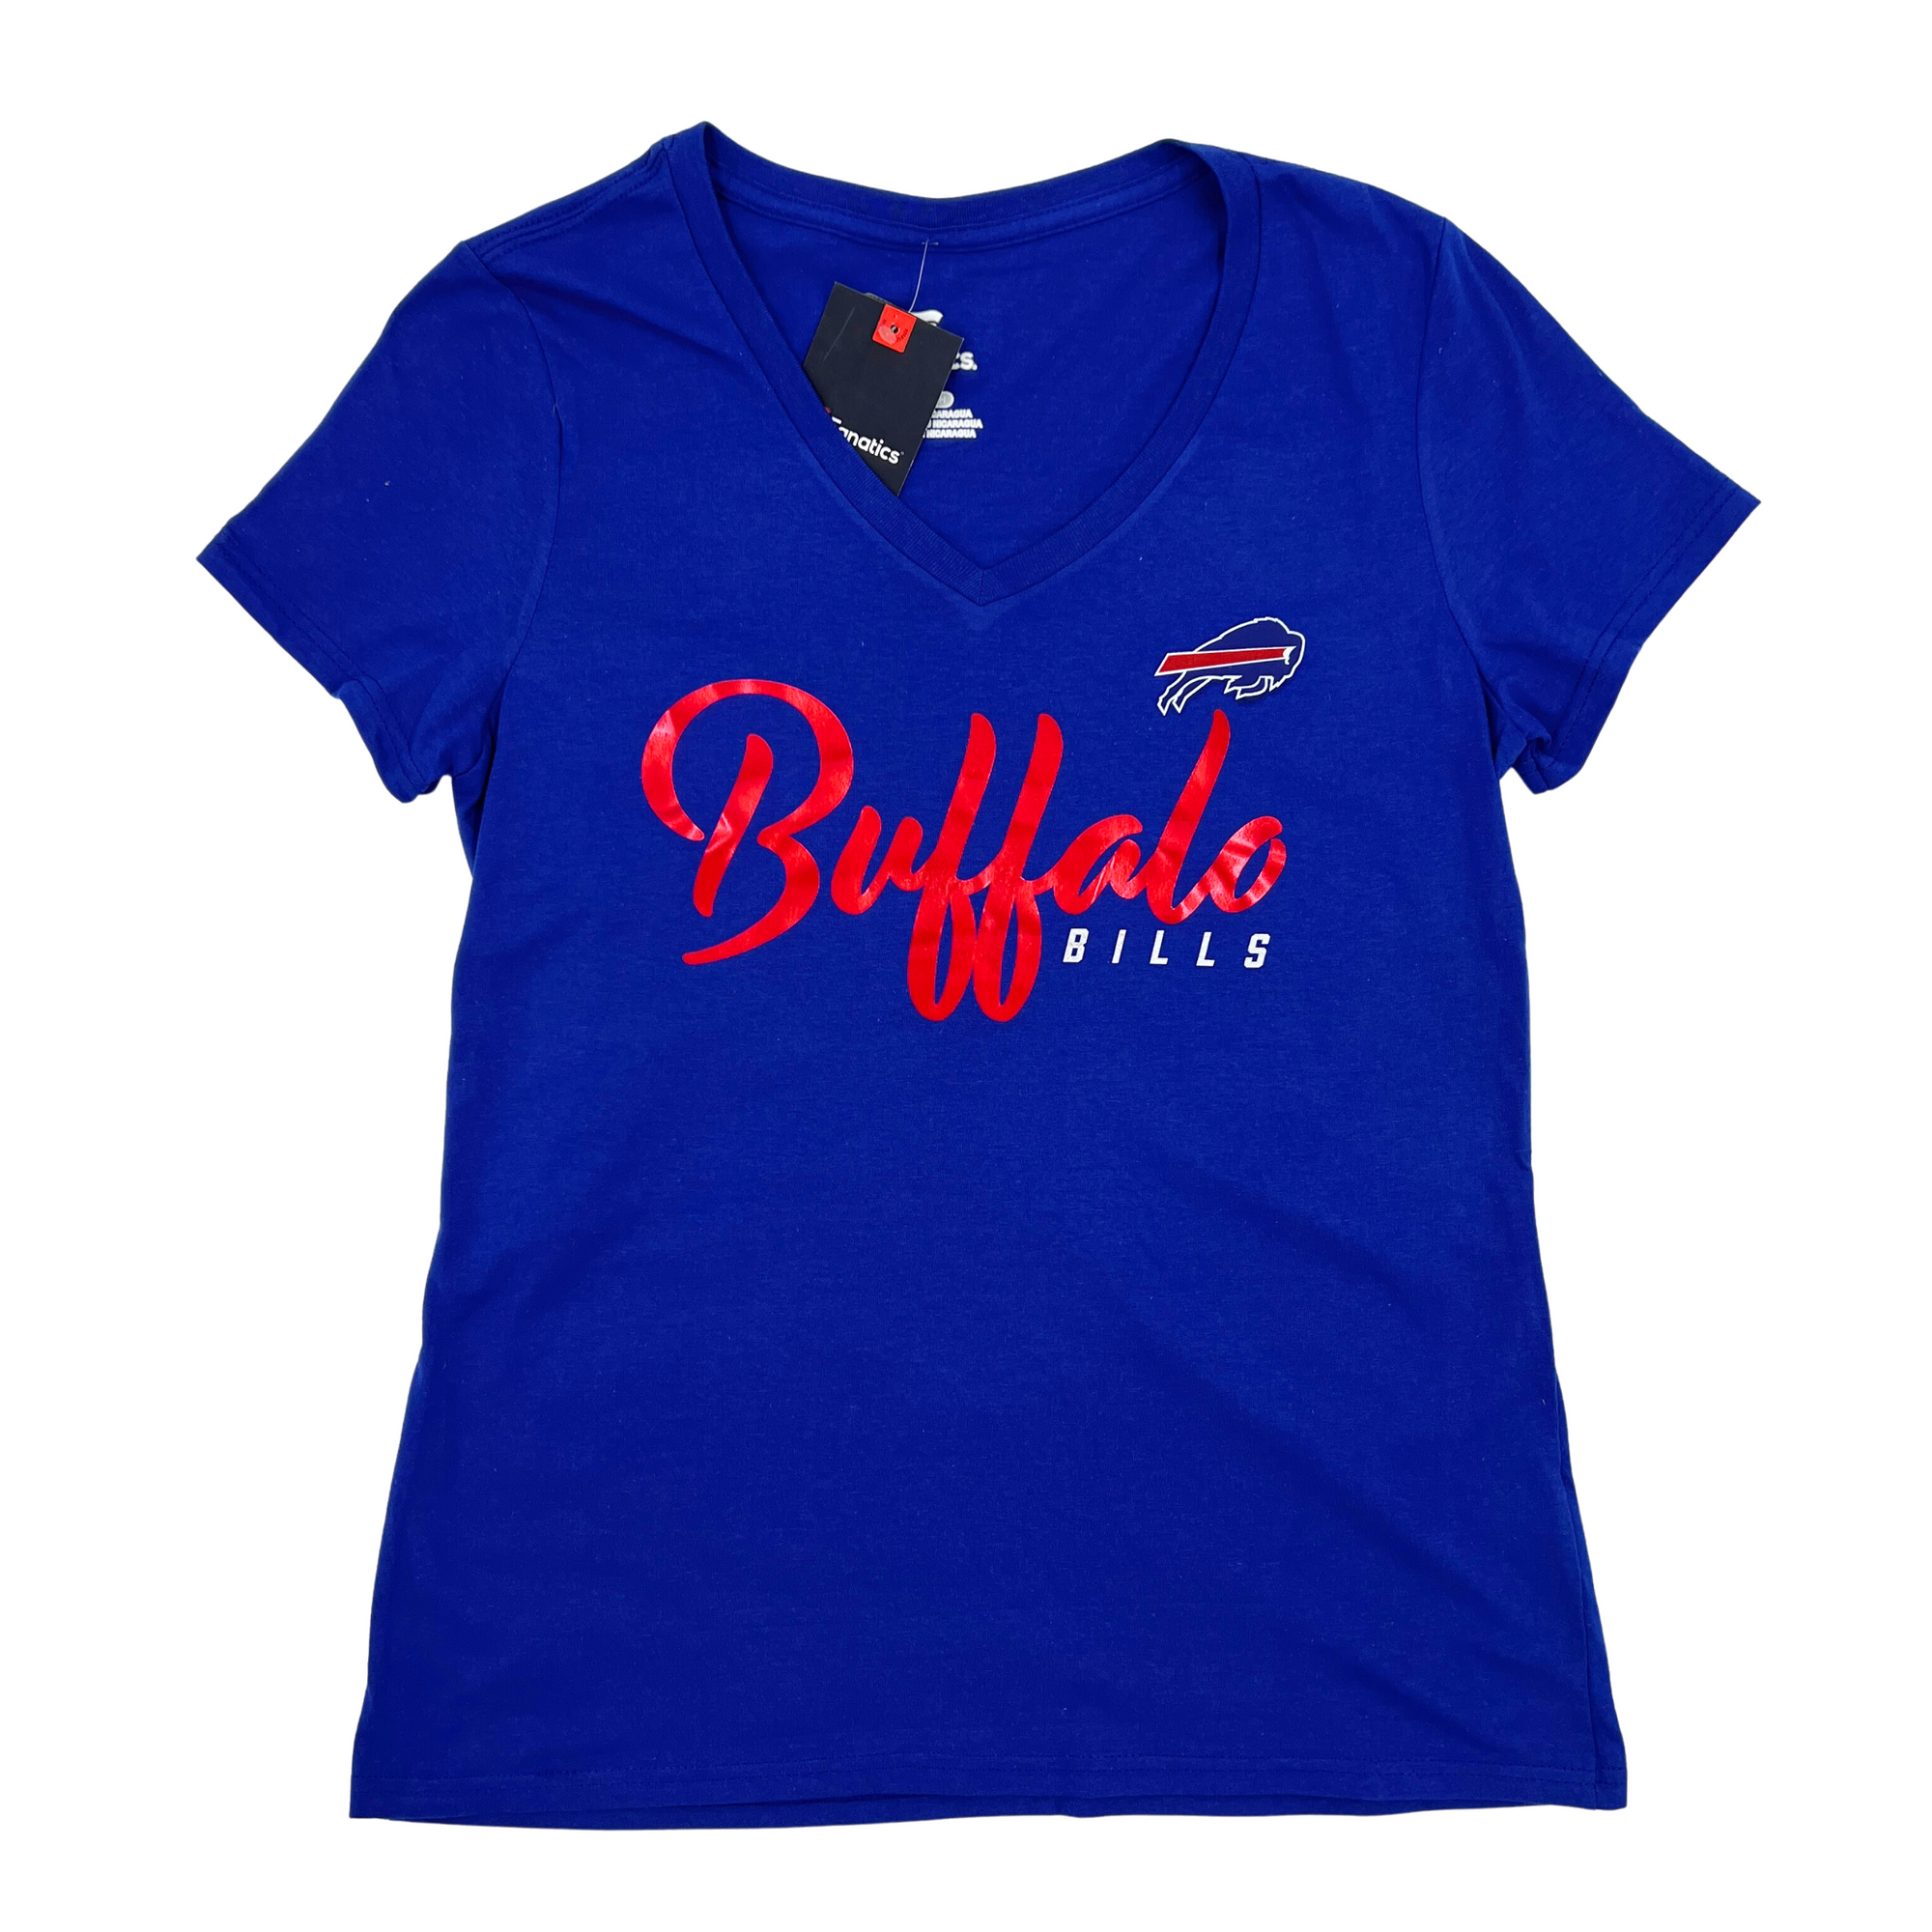 Buffalo Bills Ladies Apparel, Ladies Bills Jerseys, Clothing, Merchandise